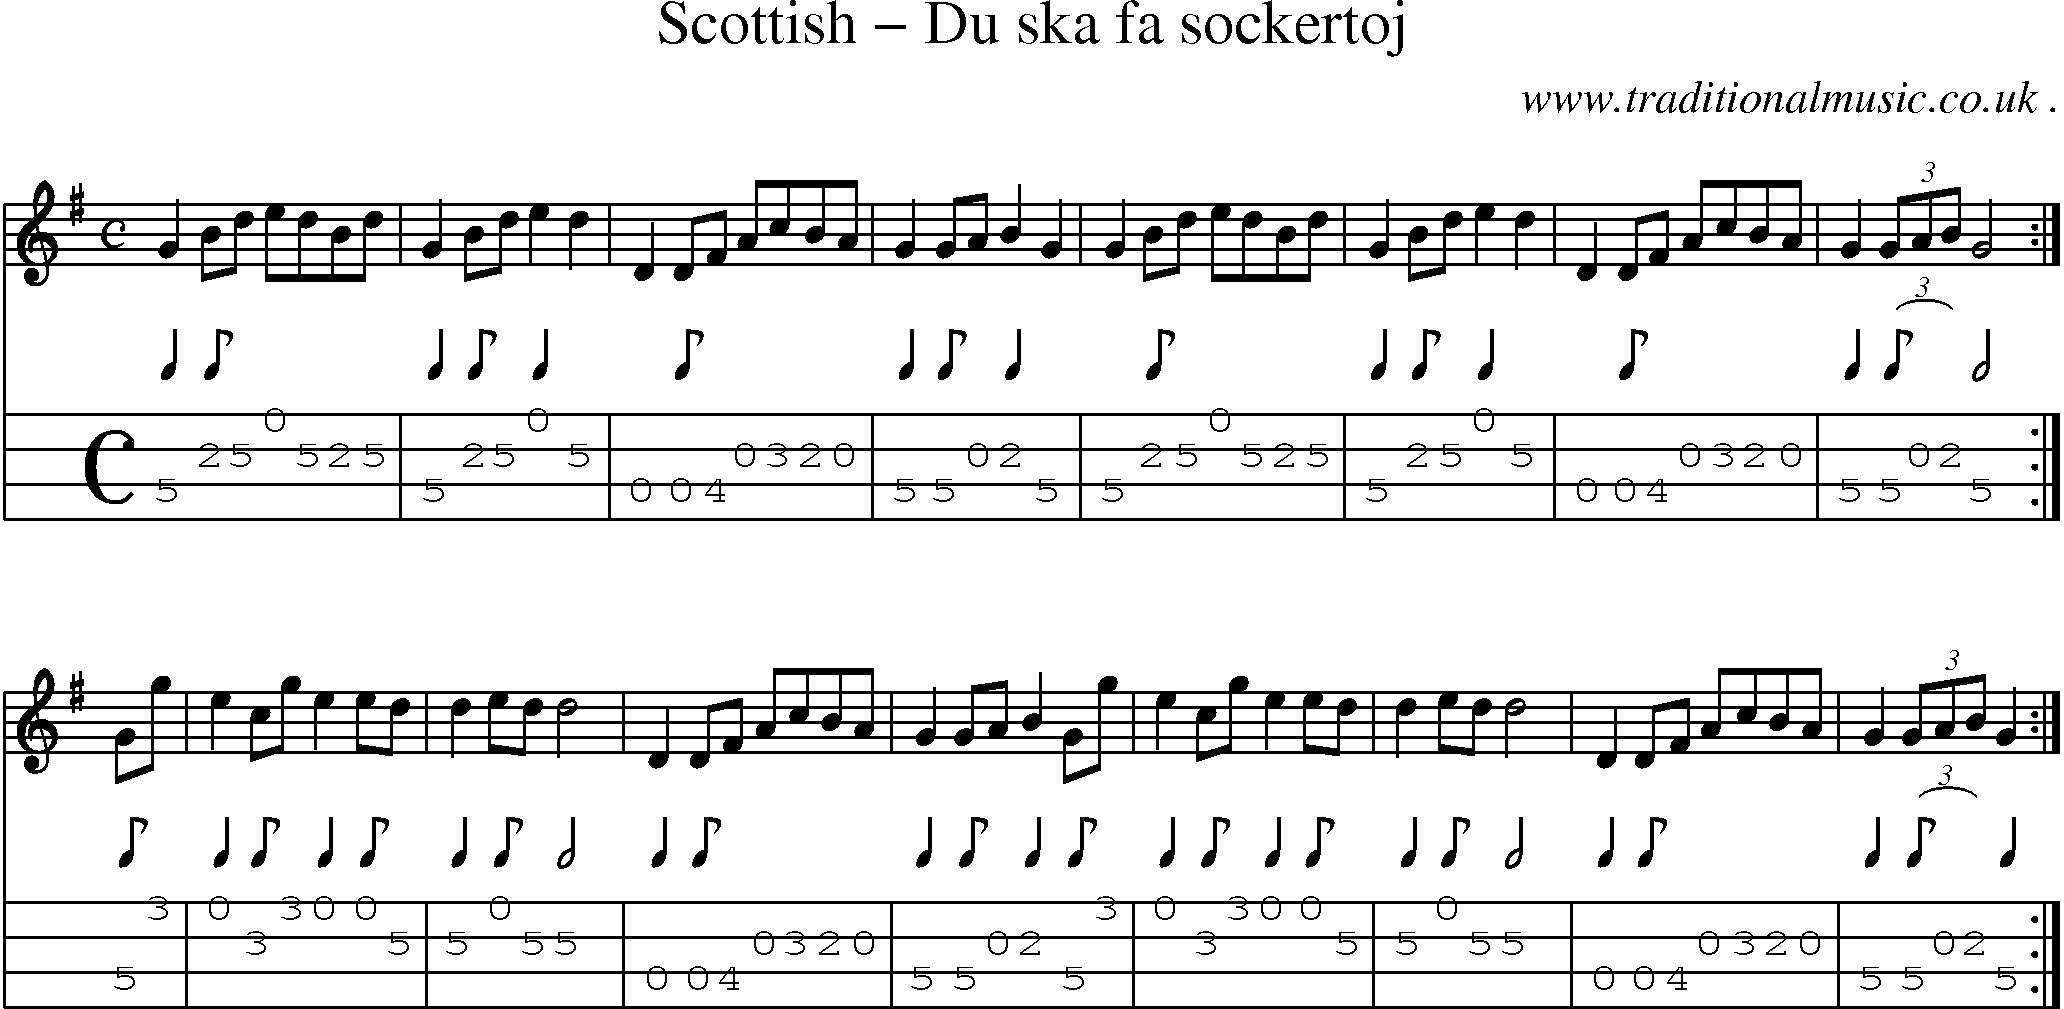 Sheet-Music and Mandolin Tabs for Scottish Du Ska Fa Sockertoj